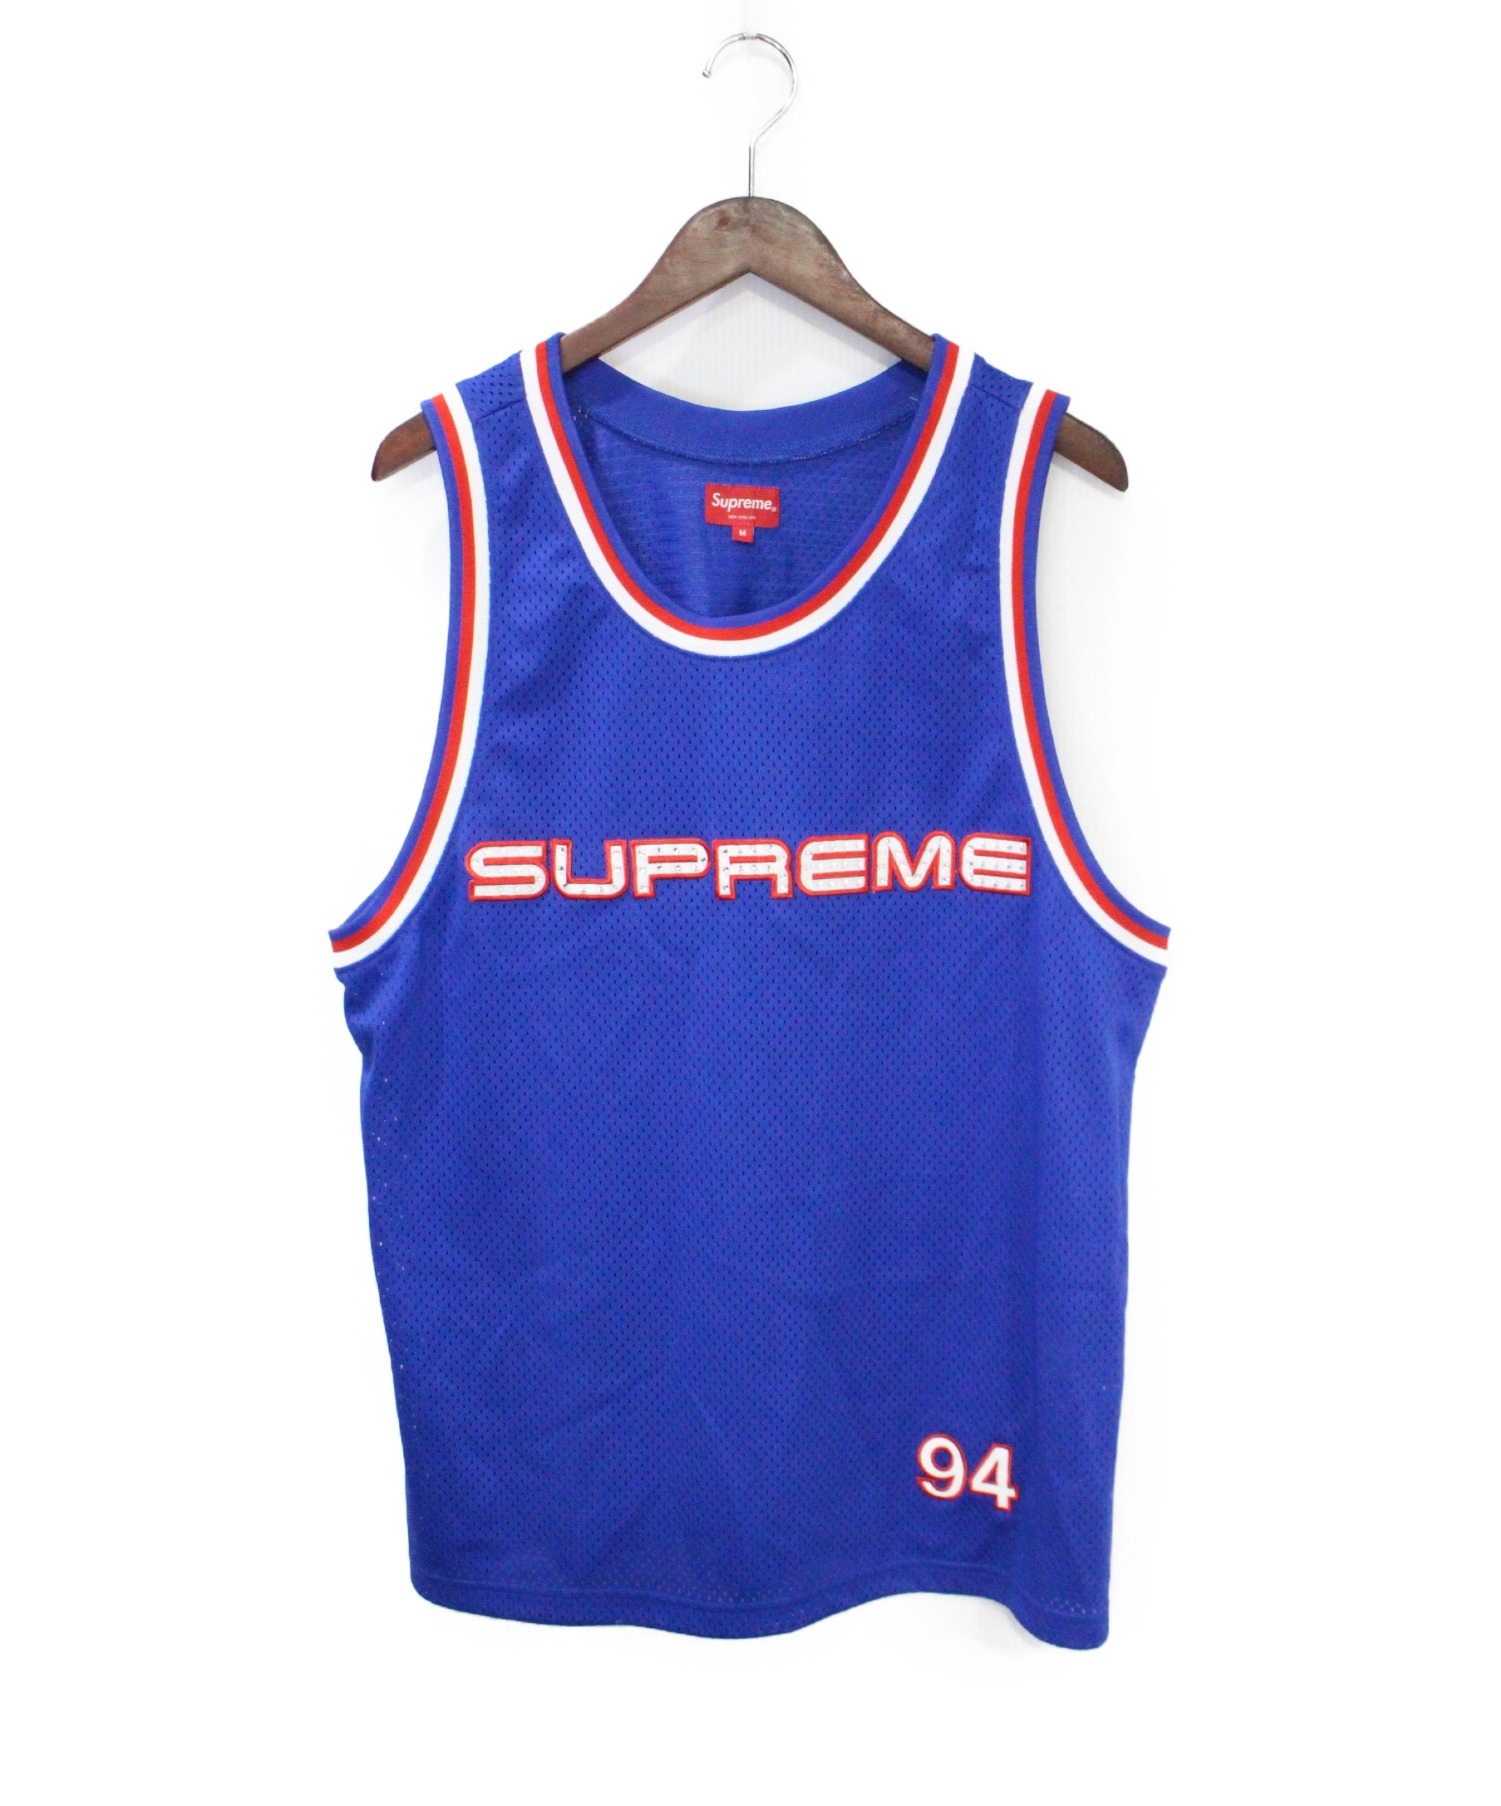 Supreme (シュプリーム) Rhinestone Basketball Jersey ブルー サイズ:M